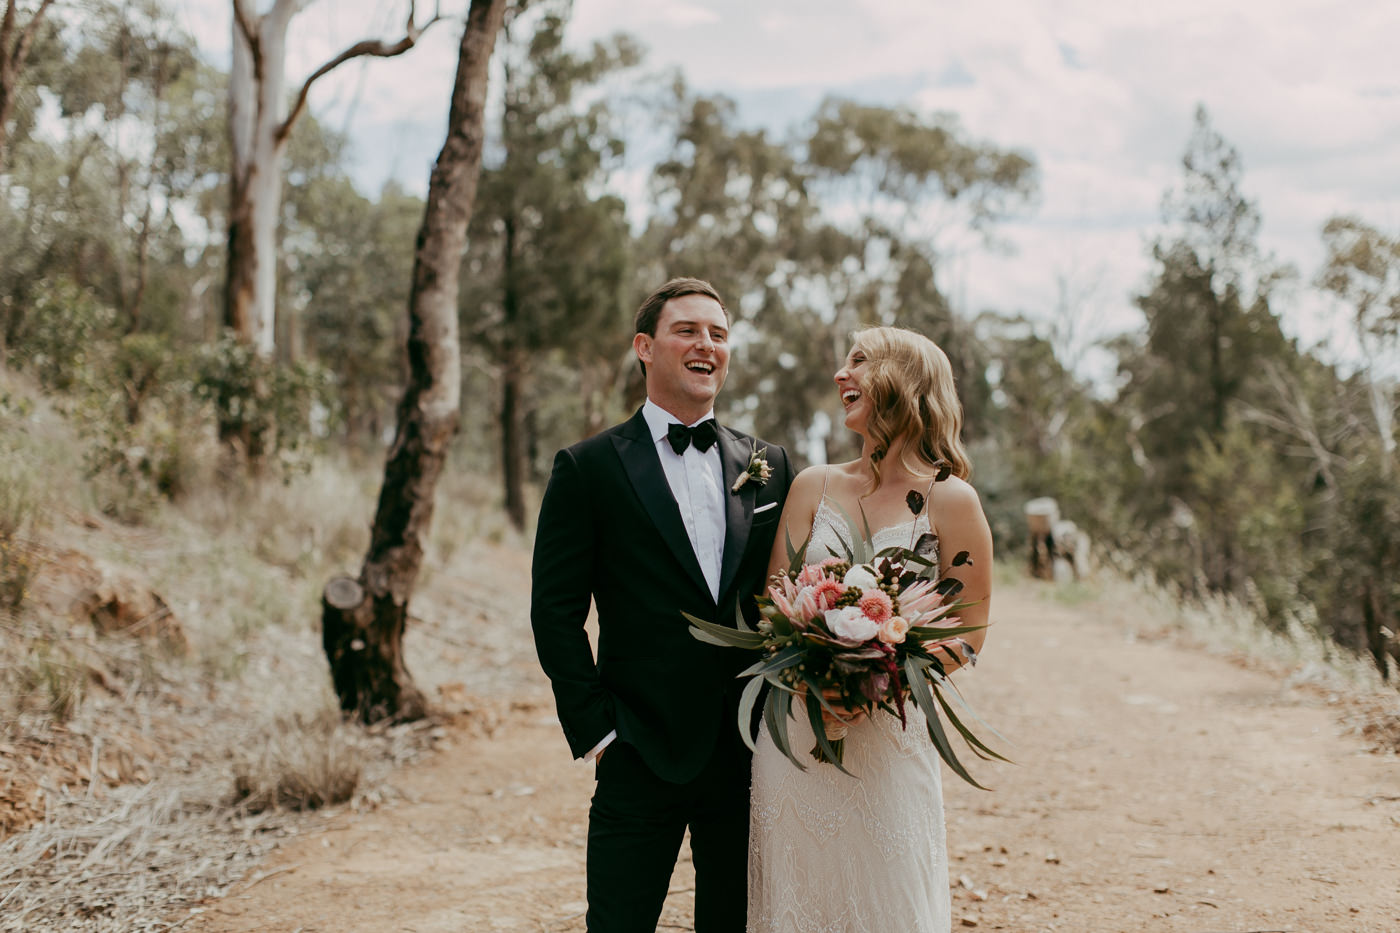 Anthony & Eliet - Wagga Wagga Wedding - Country NSW - Samantha Heather Photography-52.jpg